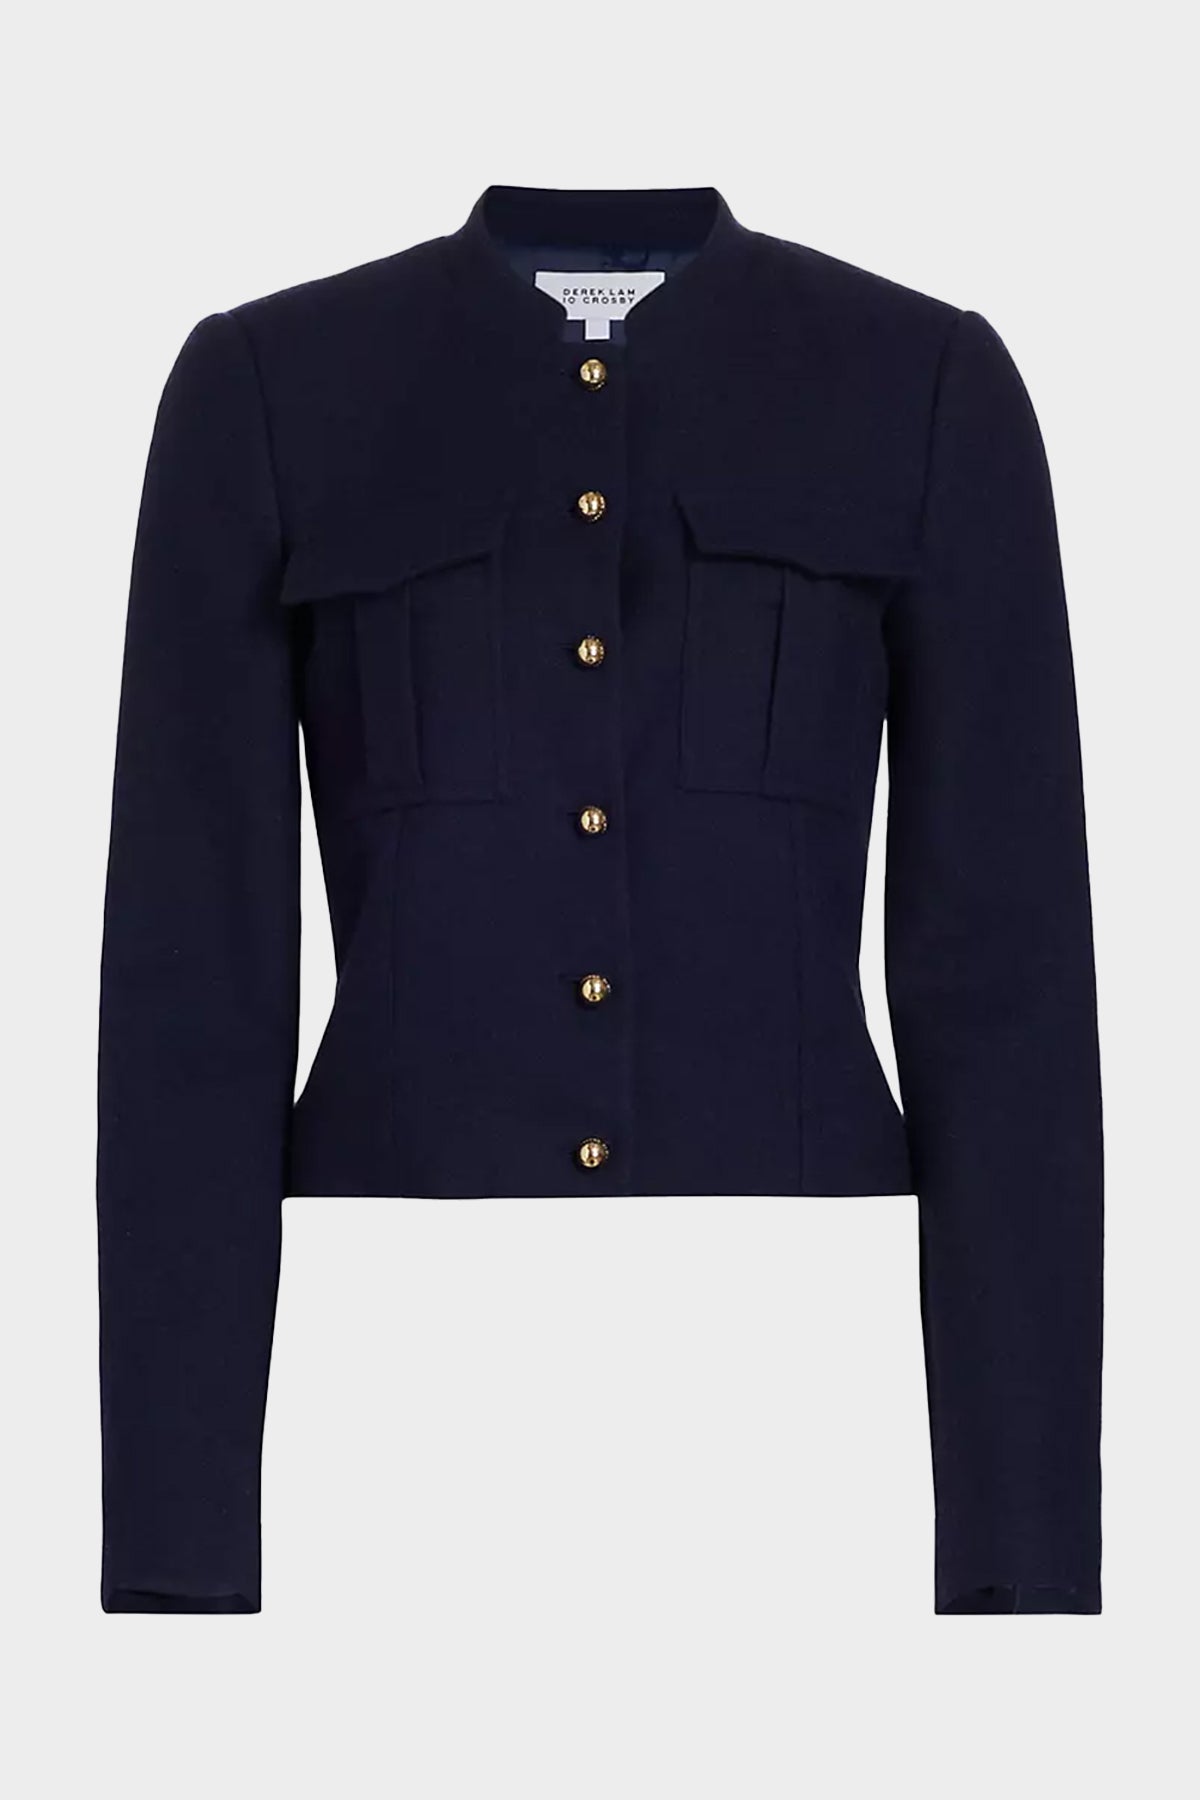 Essie Utility Jacket in Midnight - shop-olivia.com